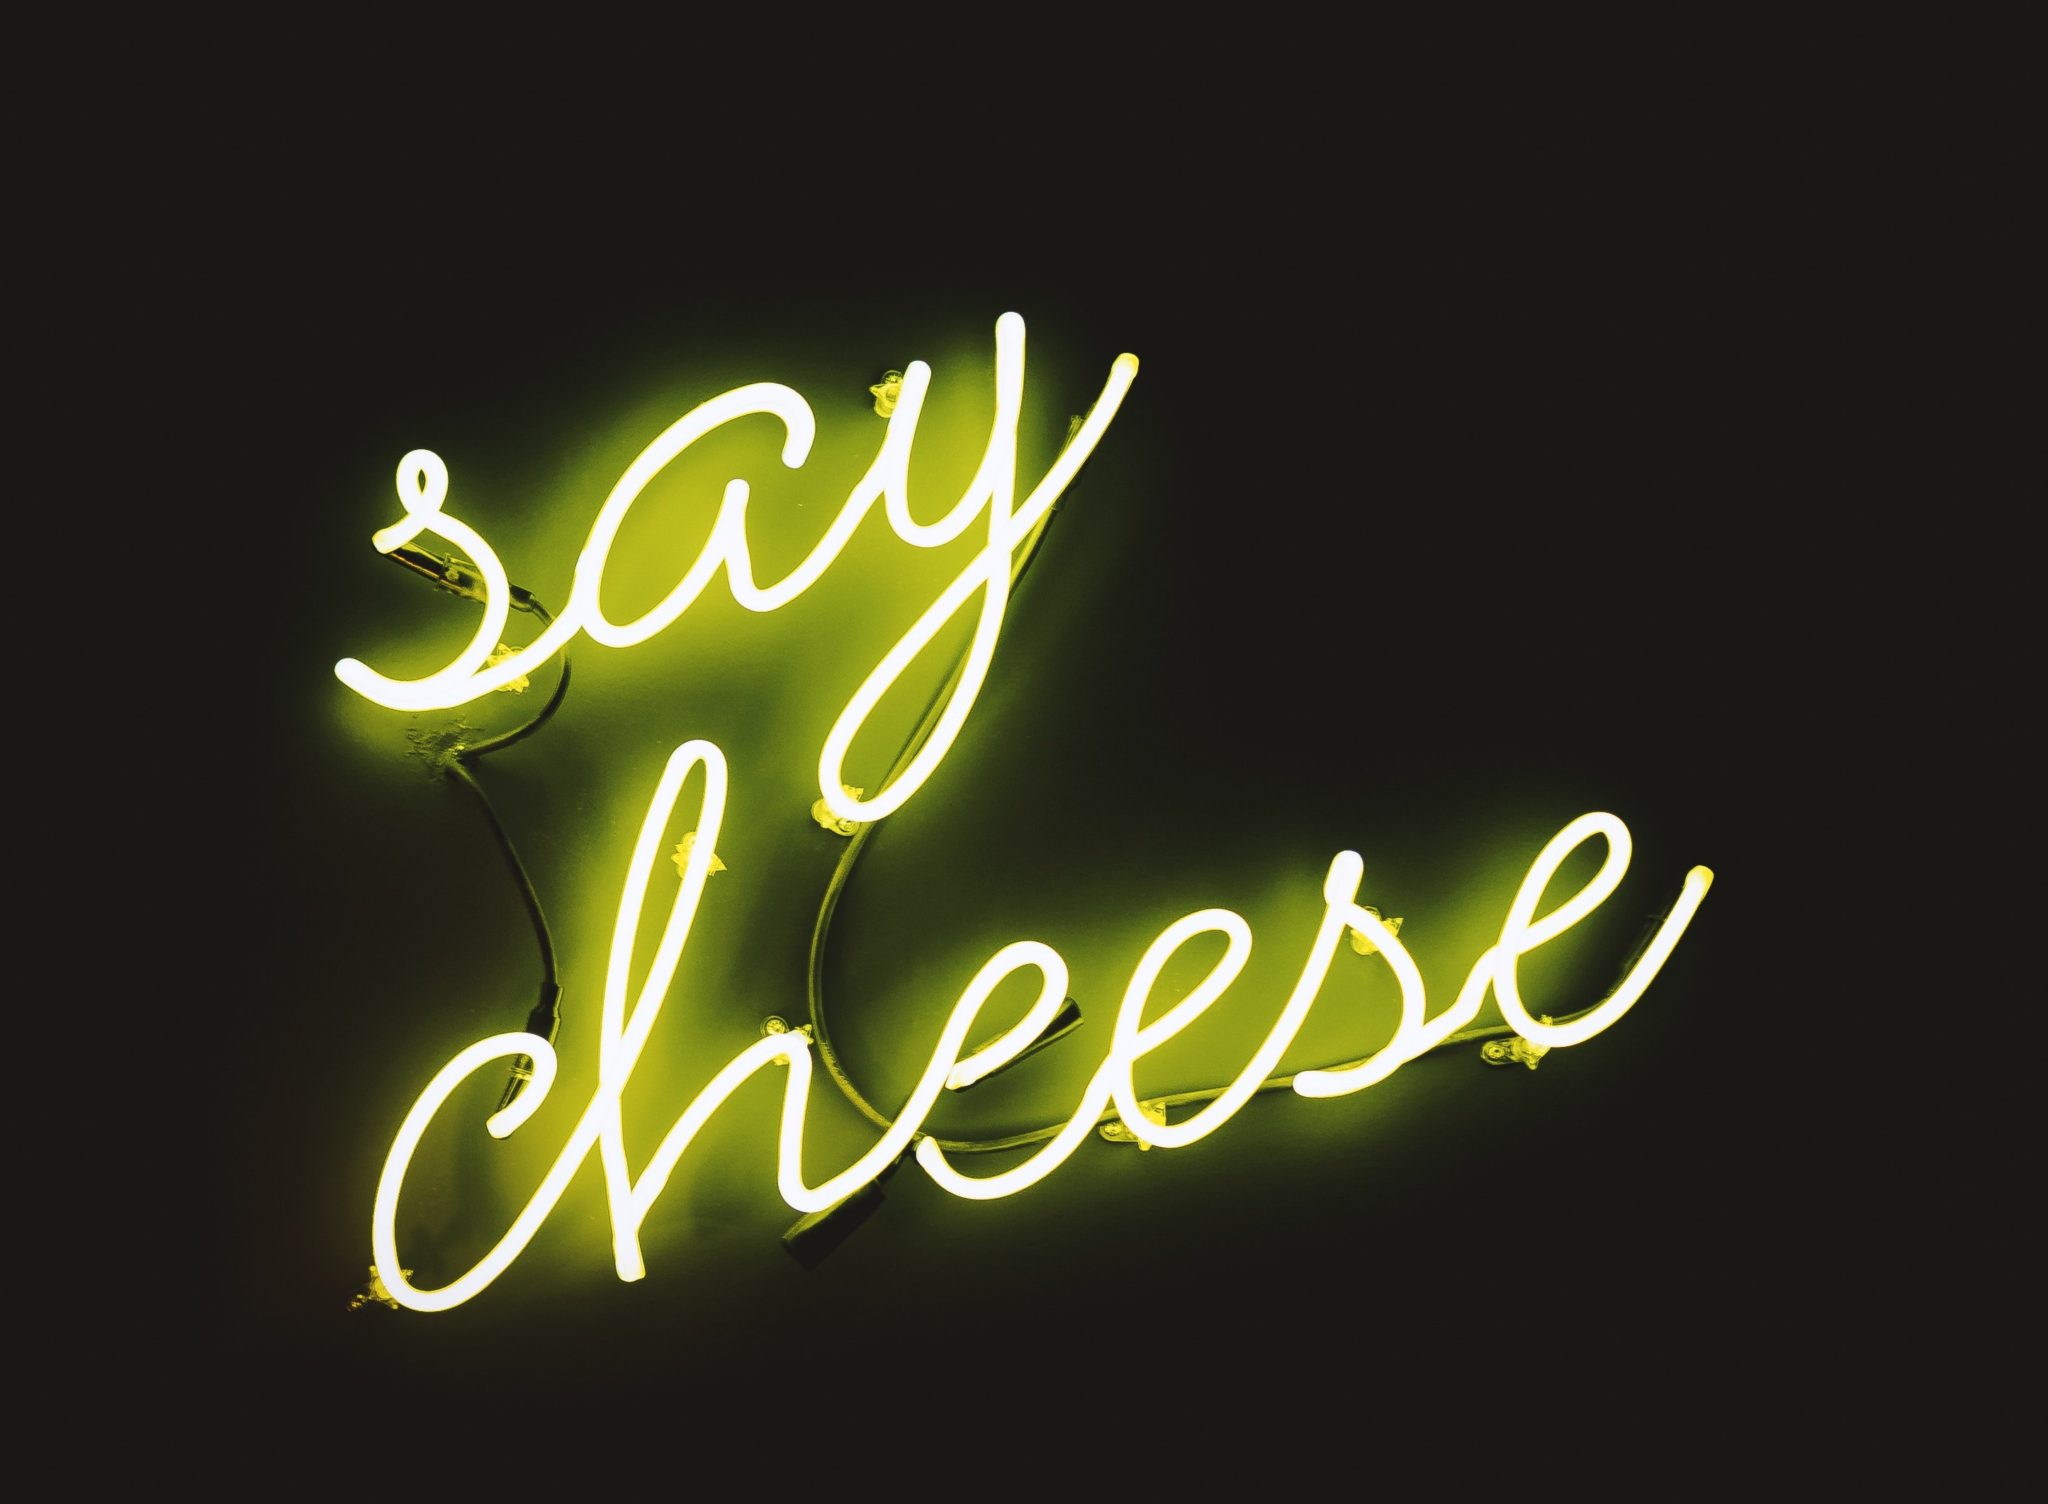 Eat healthy cholesterol rich cheese